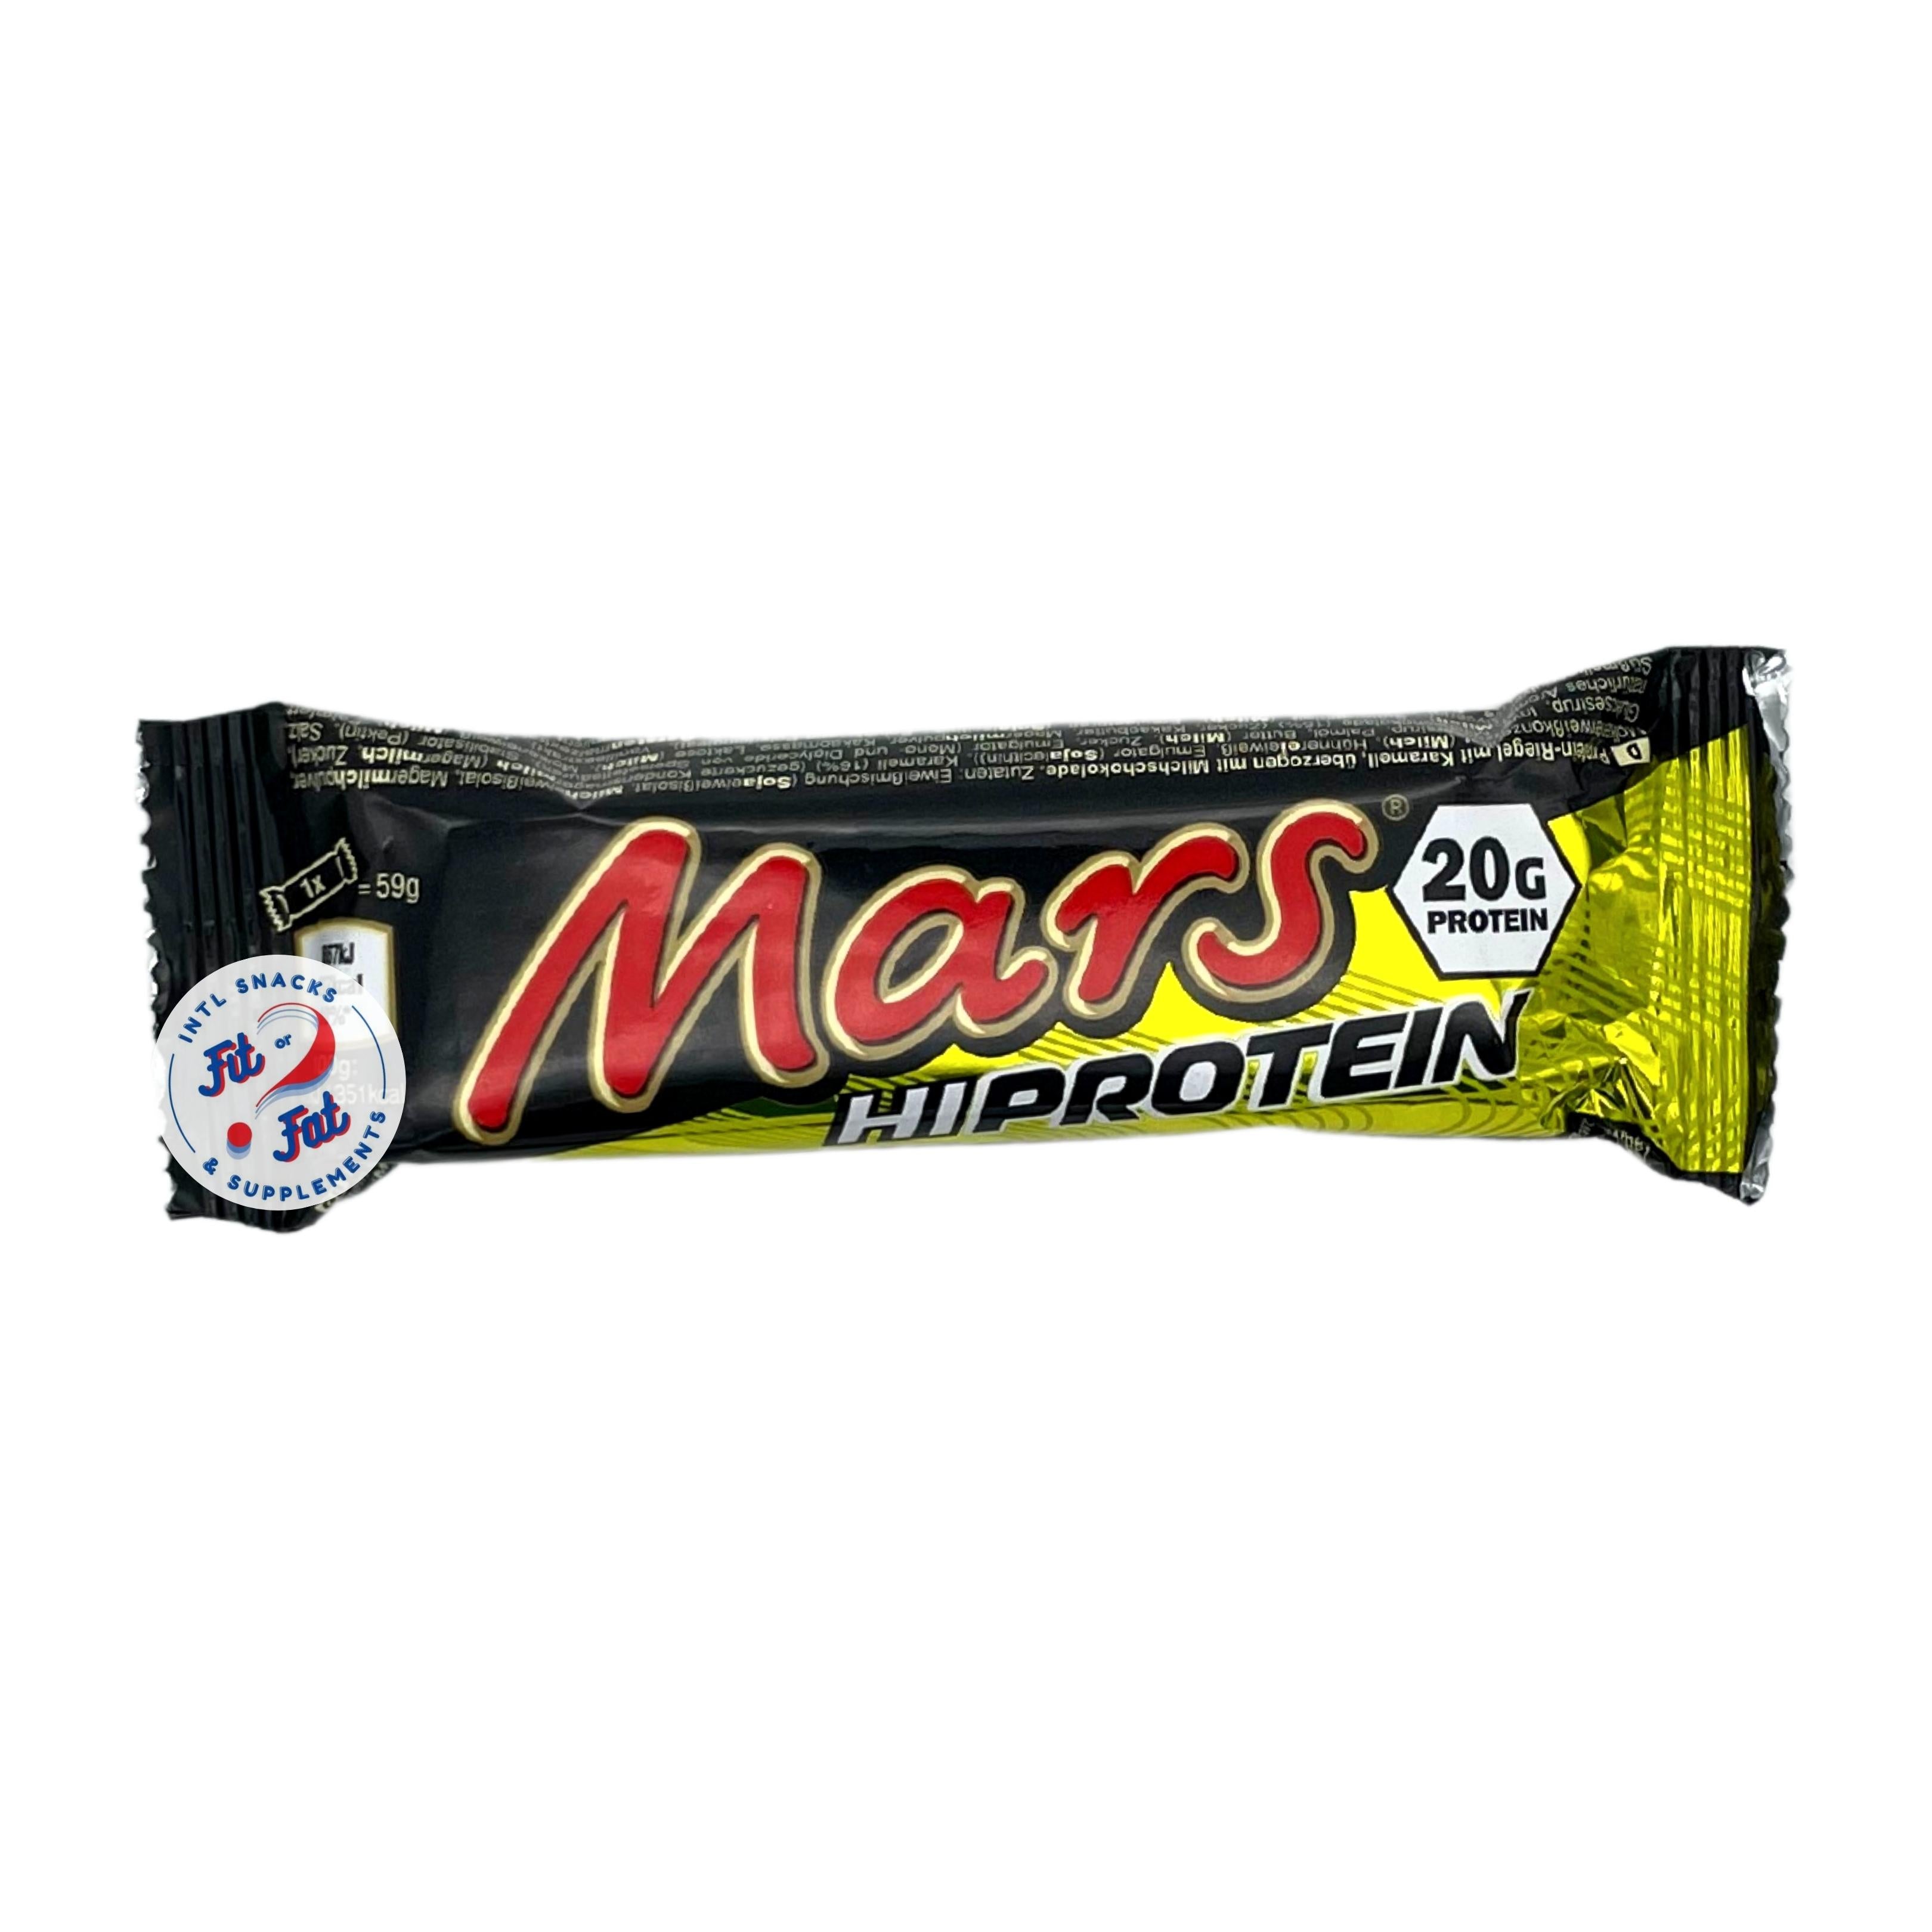 Mars Hi Protein